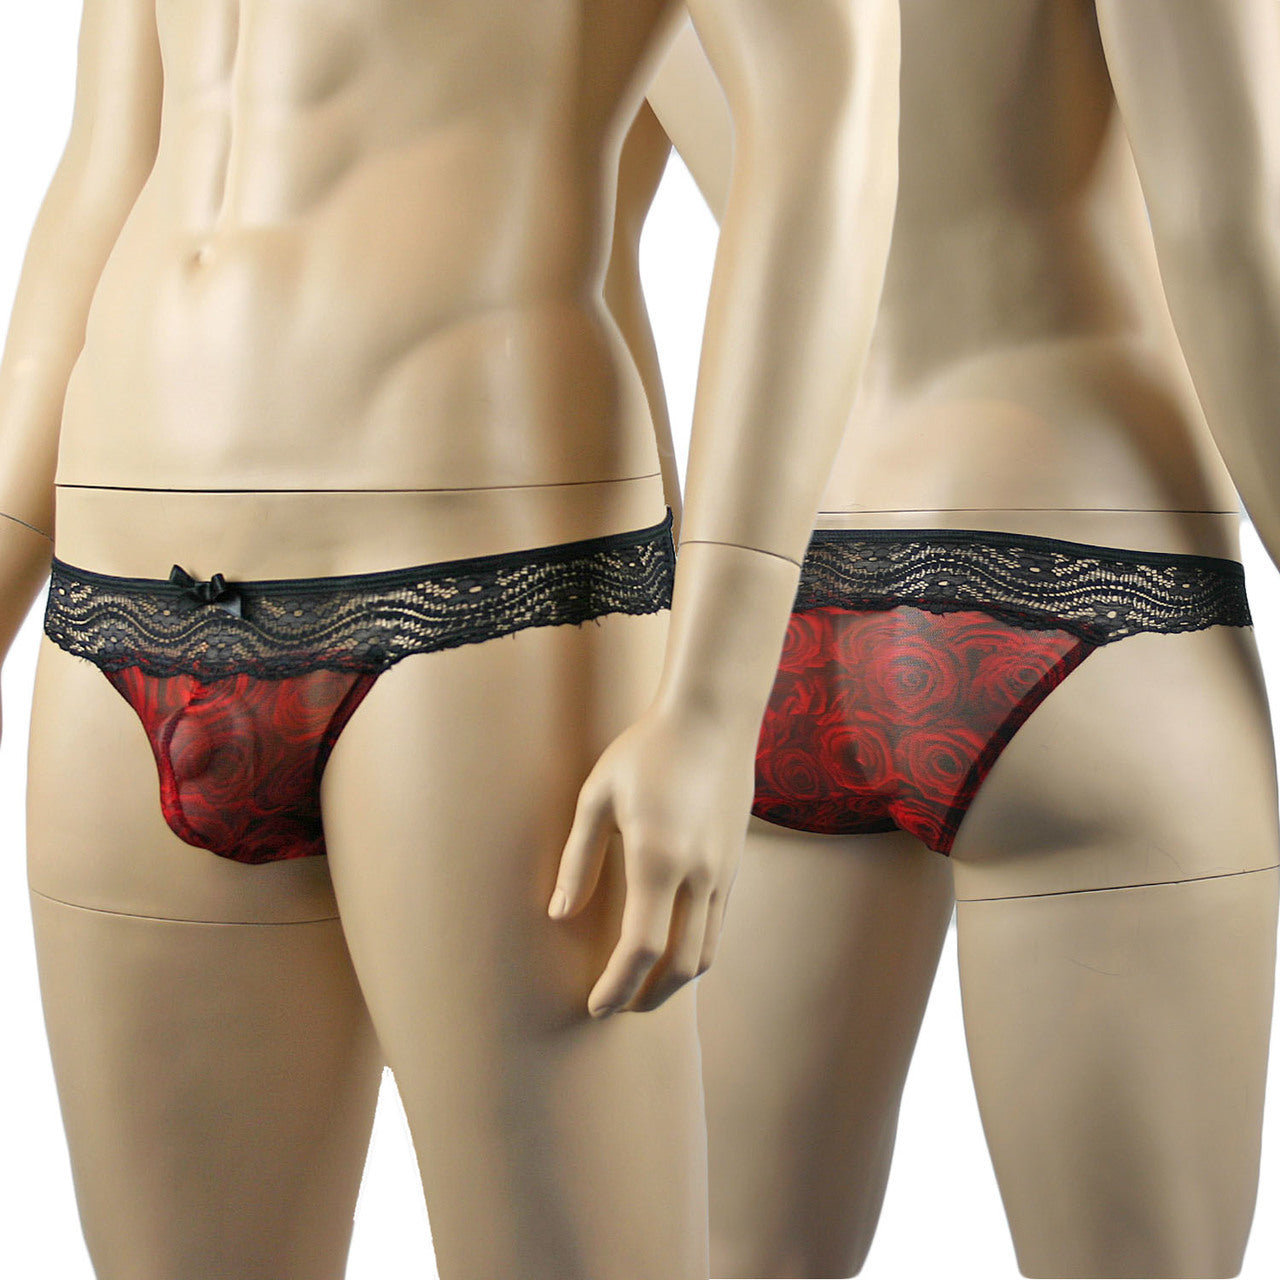 Mens Roses Bikini Brief, Sexy Sheer Lingerie Underwear Red Black